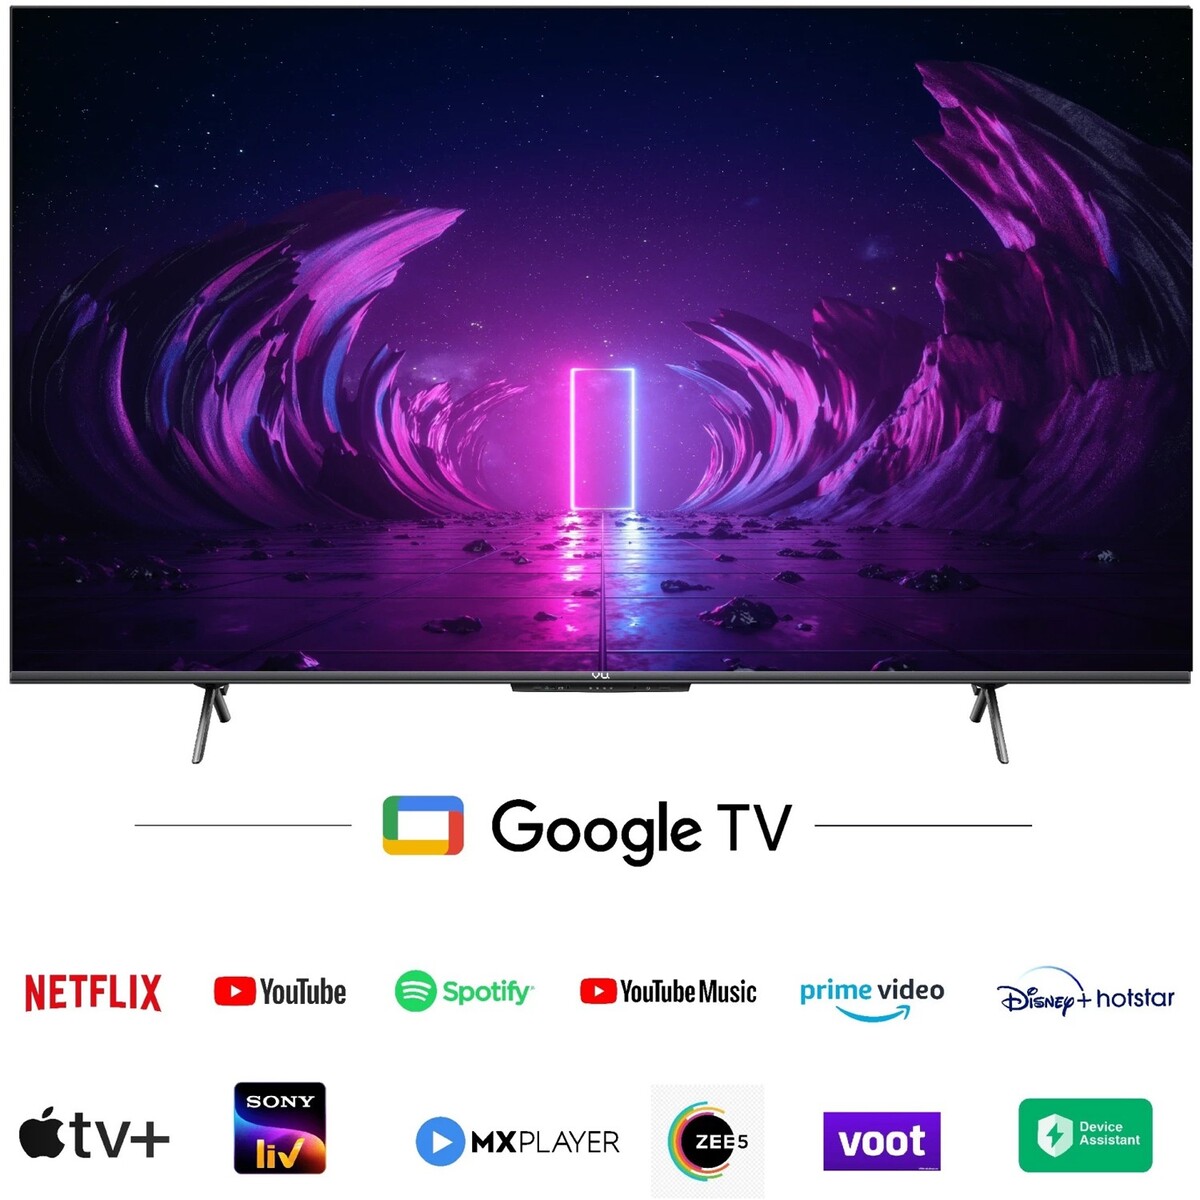 Vu 4K Ultra HD GloLED Smart Google TV 50GloLED 50"